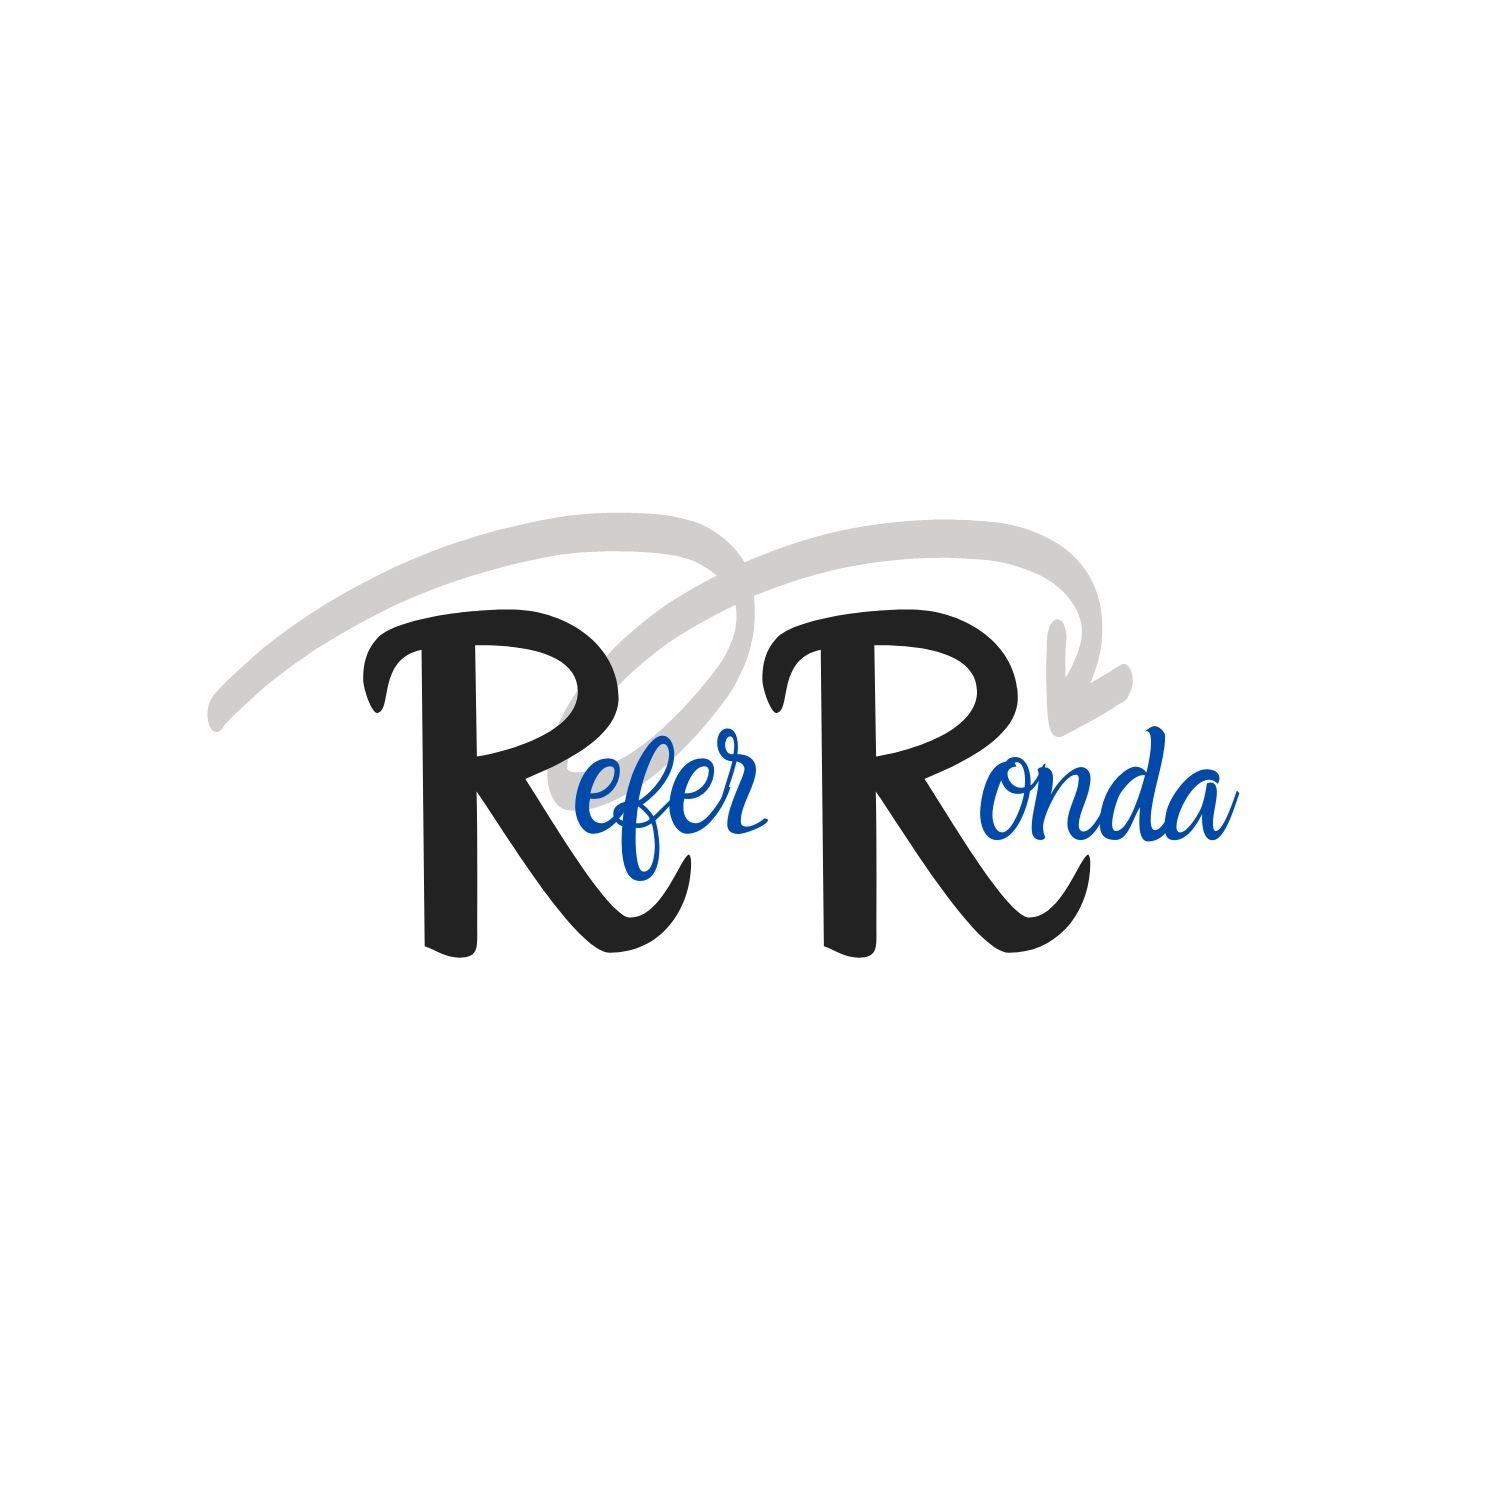 Refer Ronda Digital Marketing, LLC